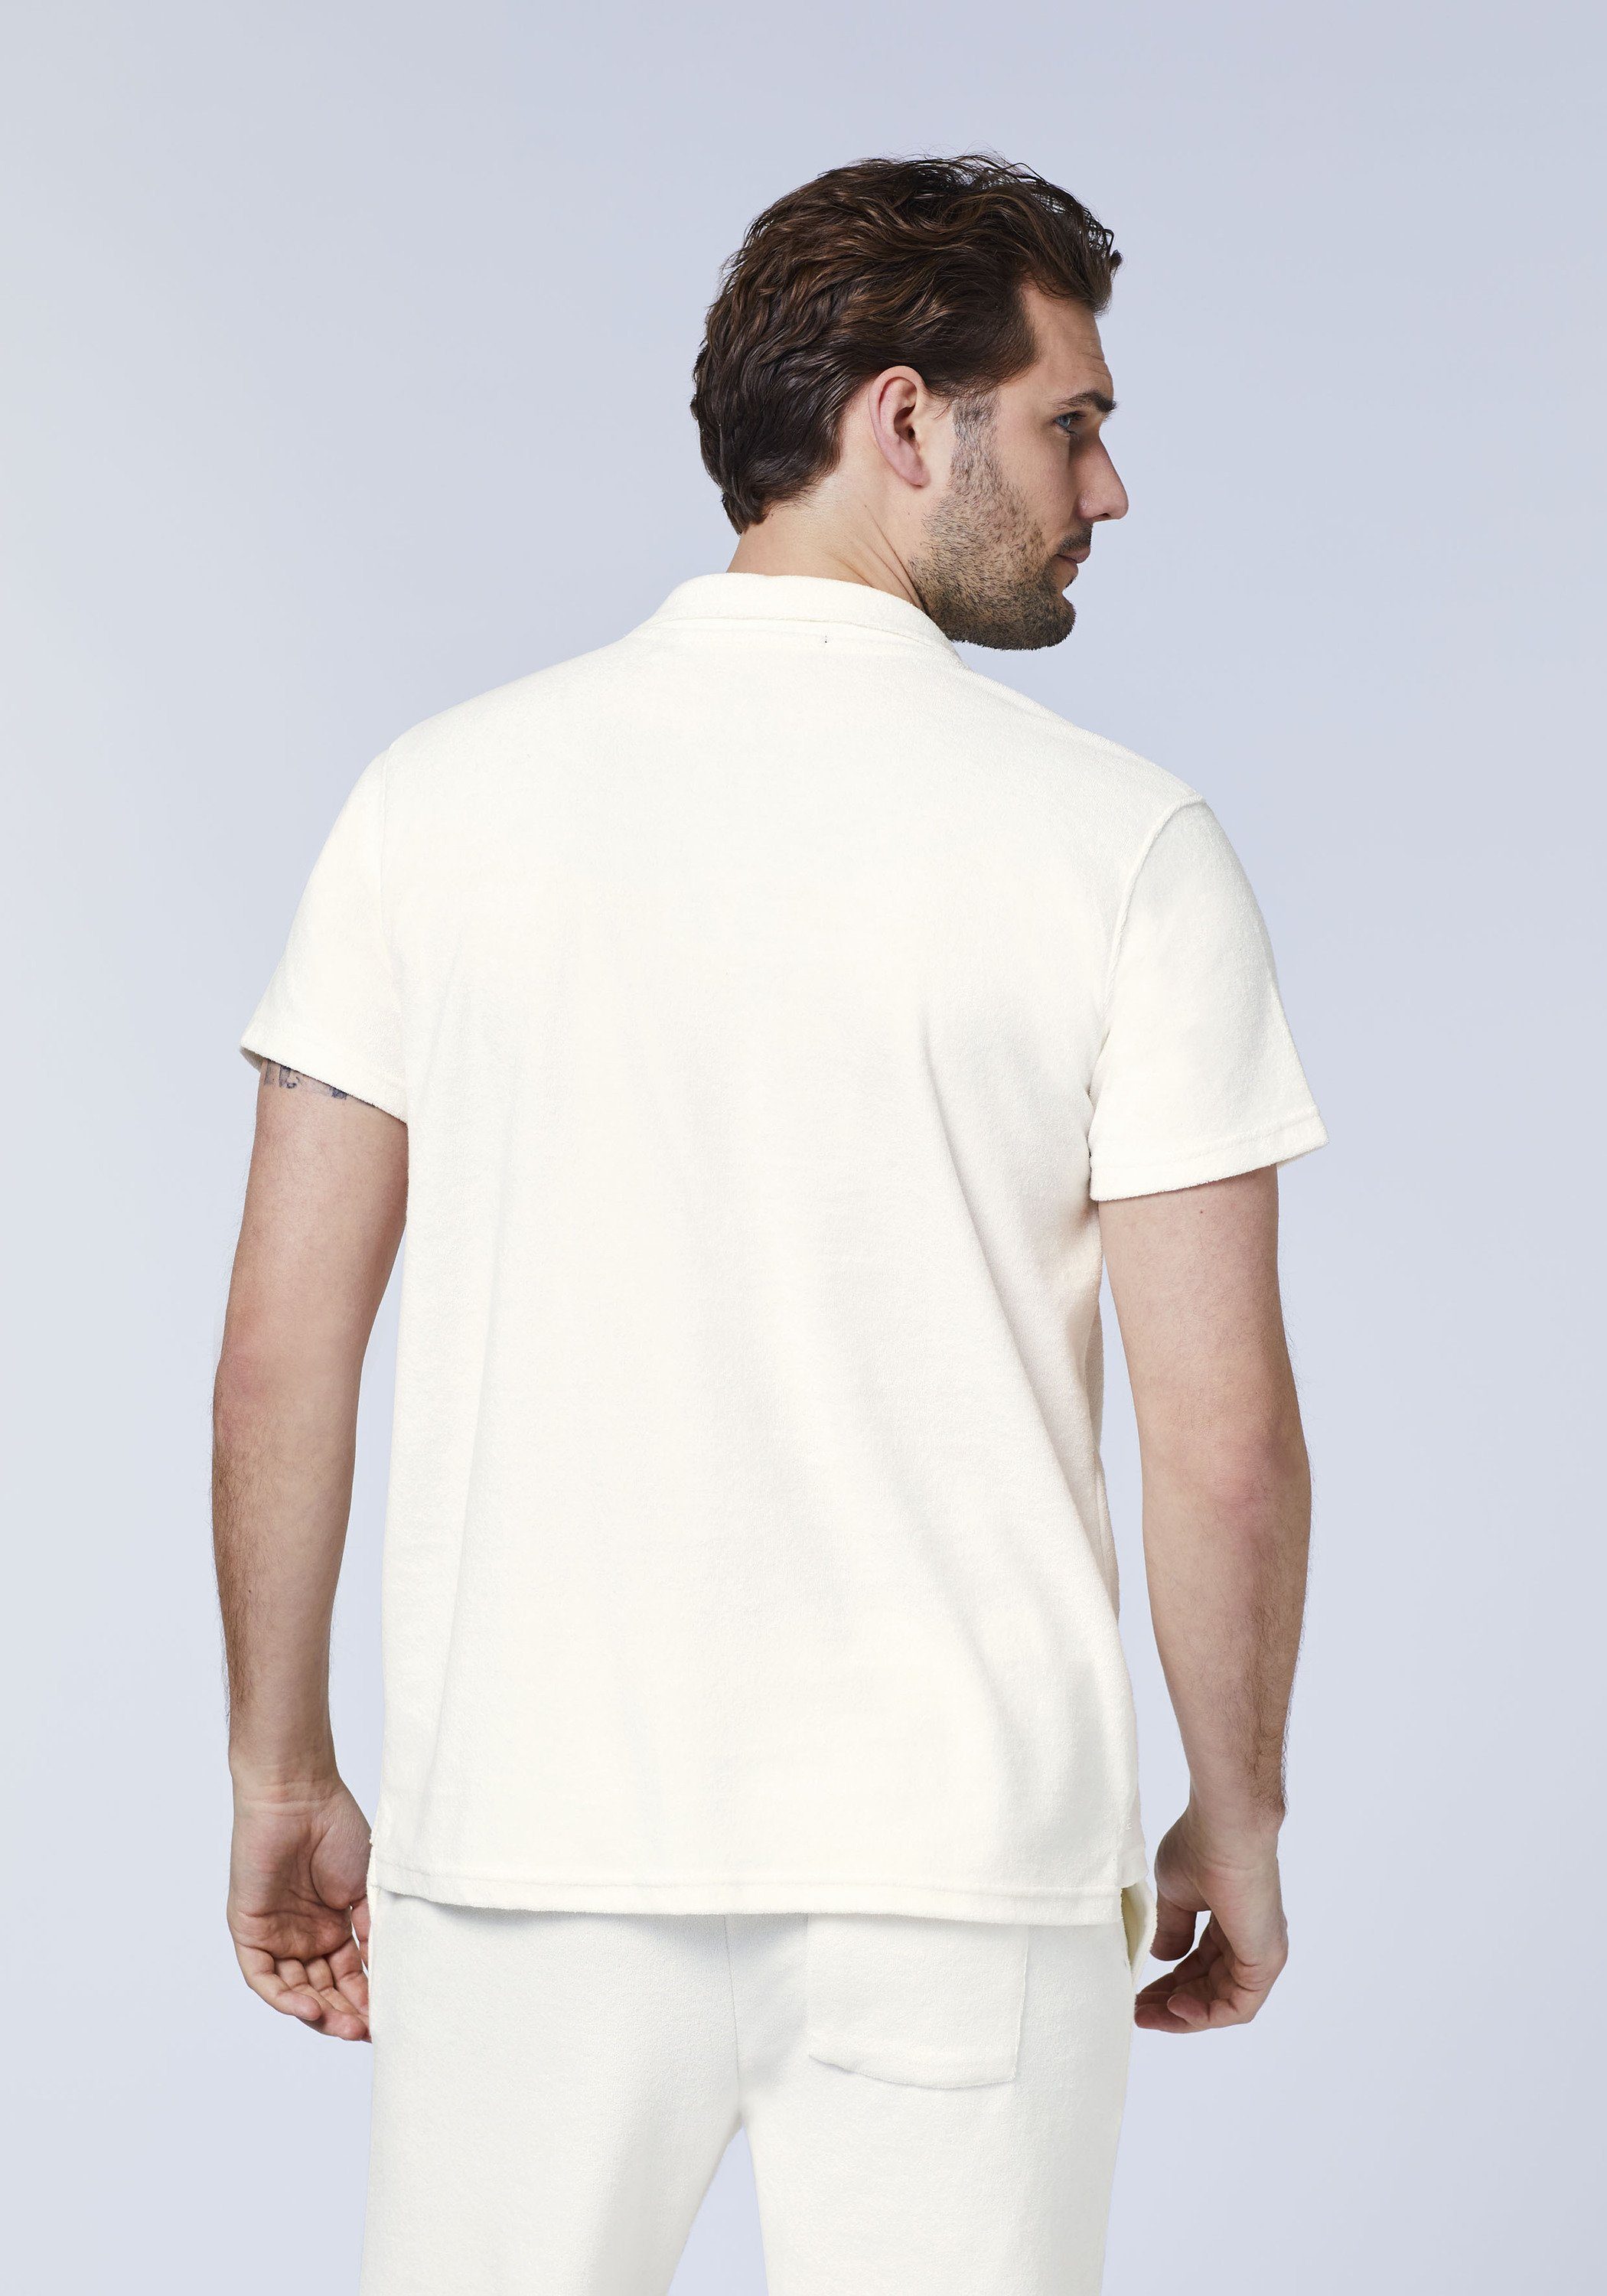 Star Chiemsee Frottee-Look Poloshirt 1 Poloshirt White modernen im 11-4202